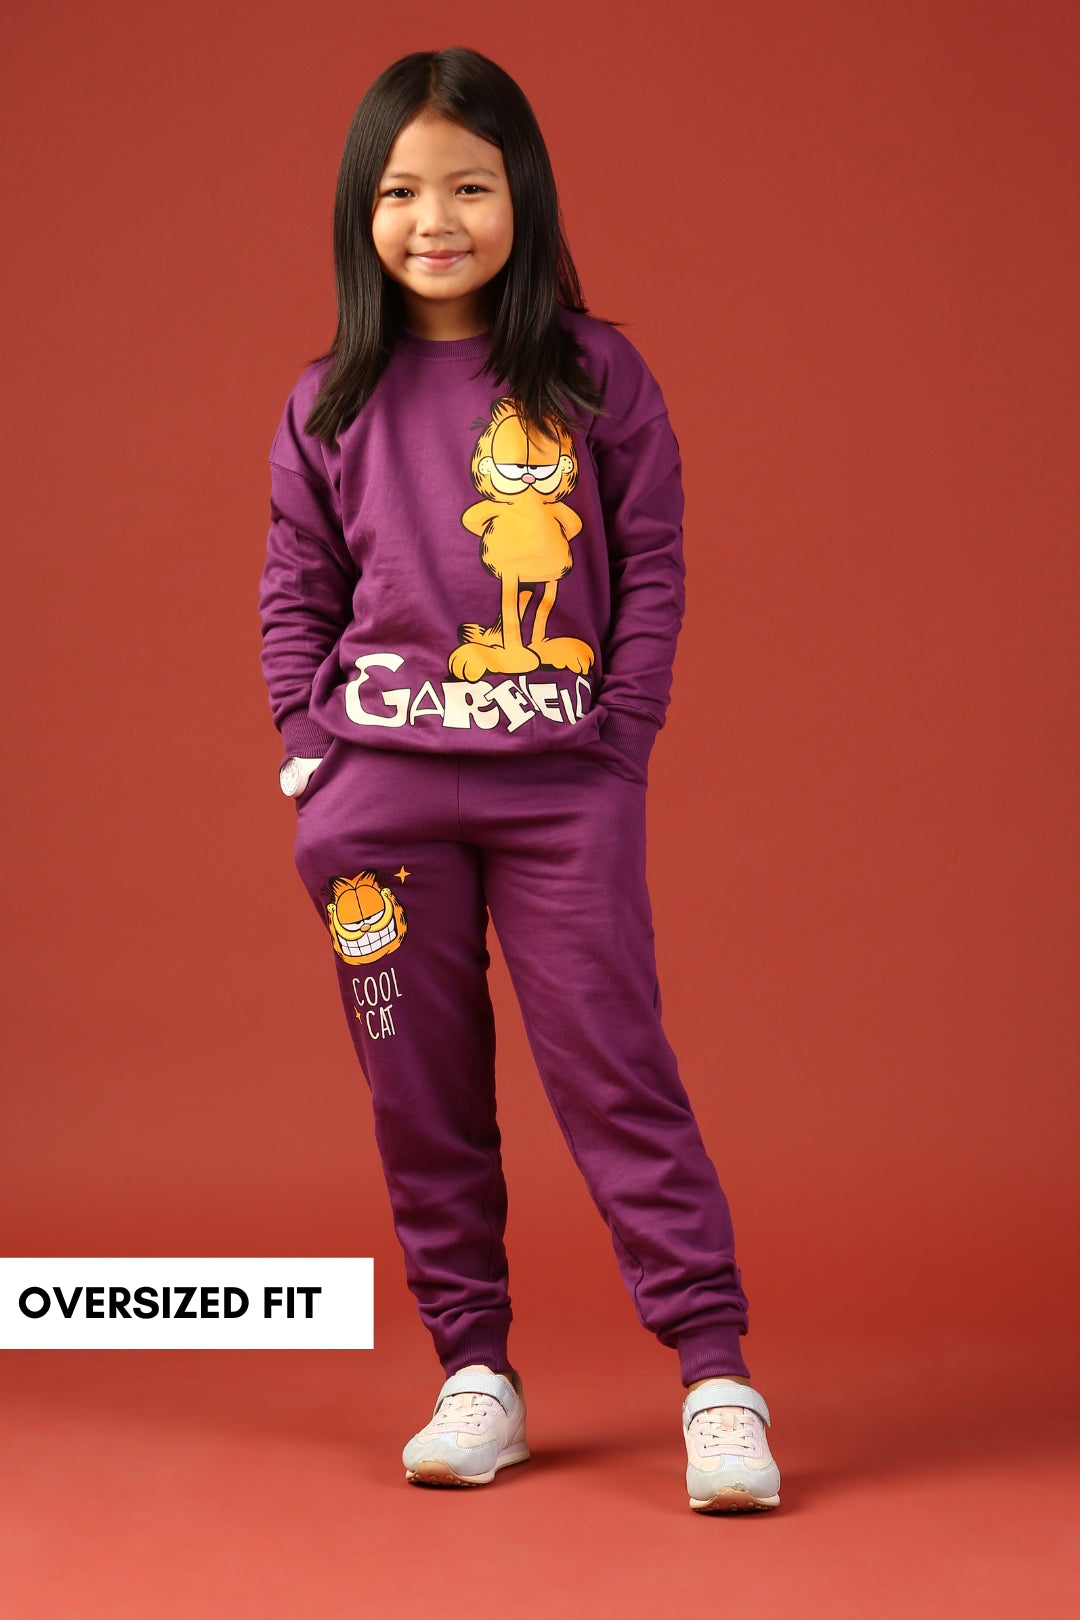 Garfield Classic Purple Co-ord set